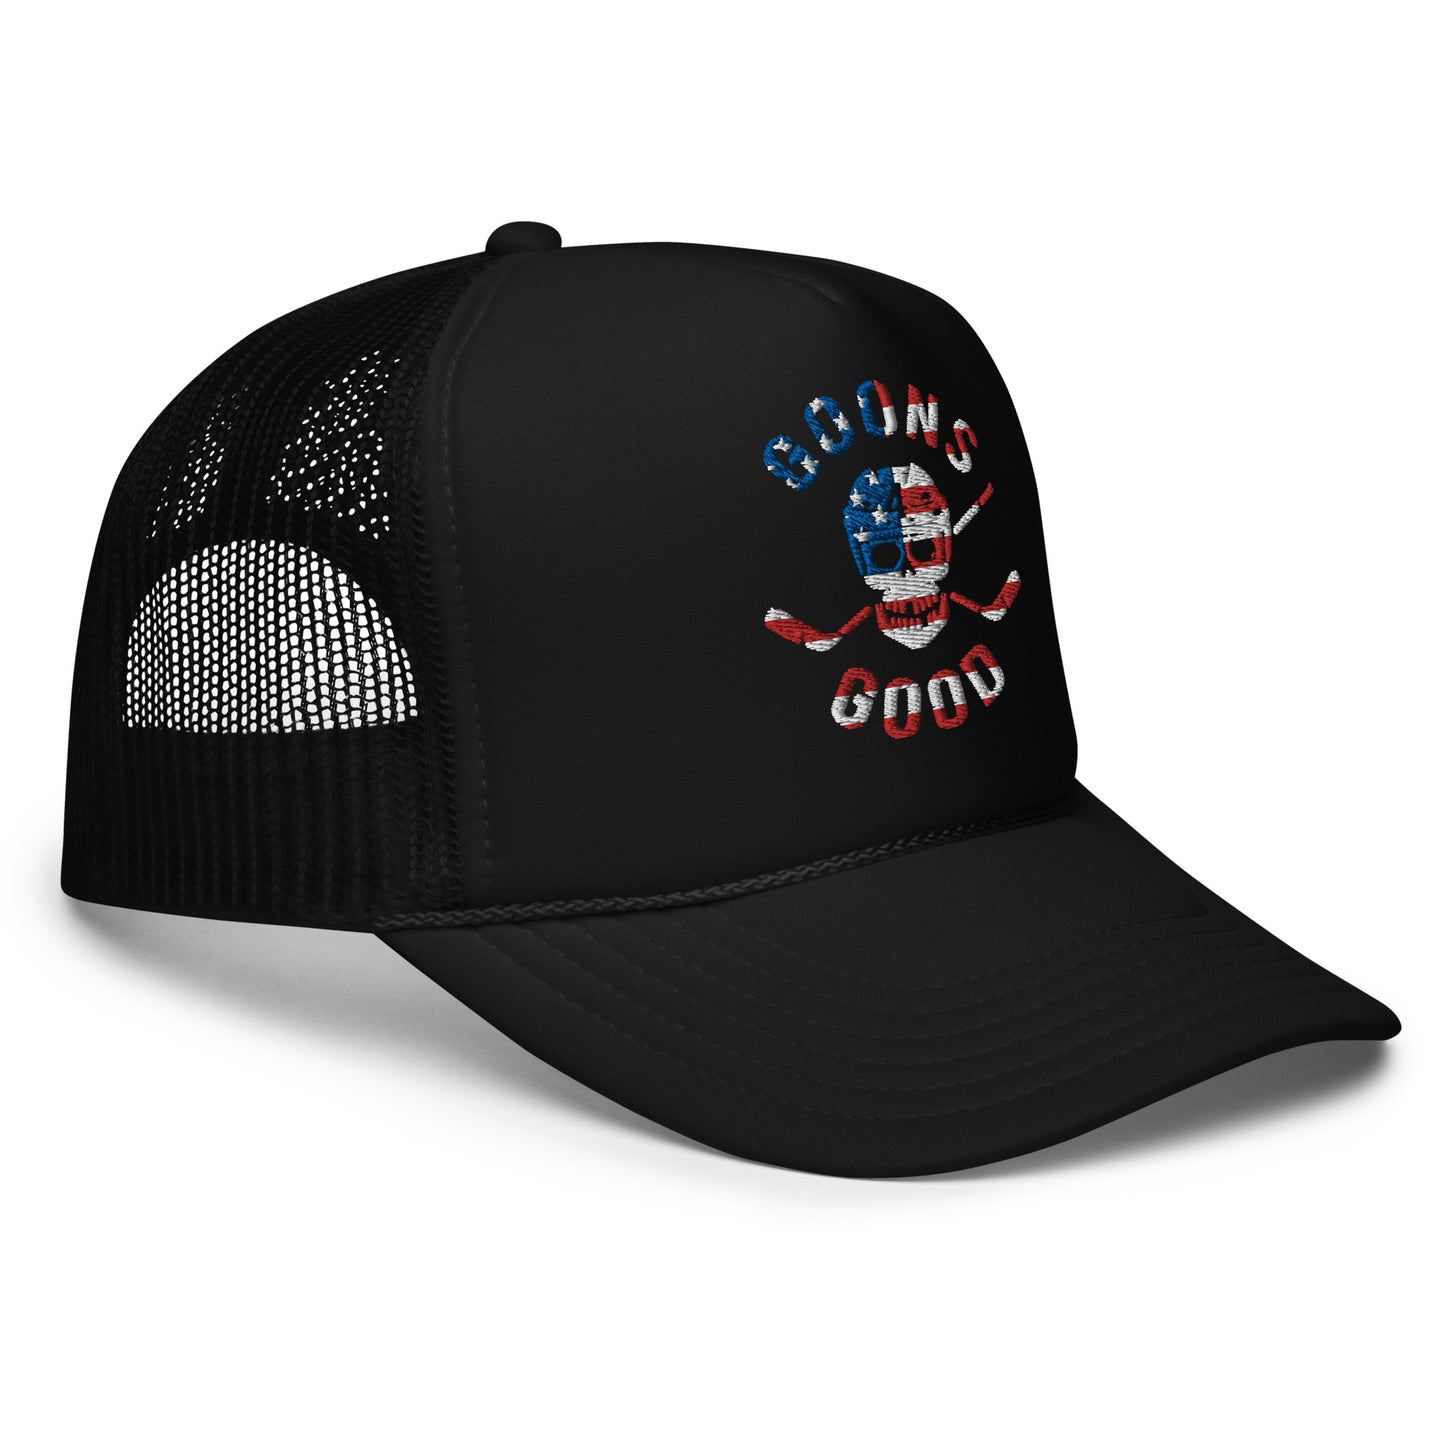 GOONS USA I Foam trucker hat